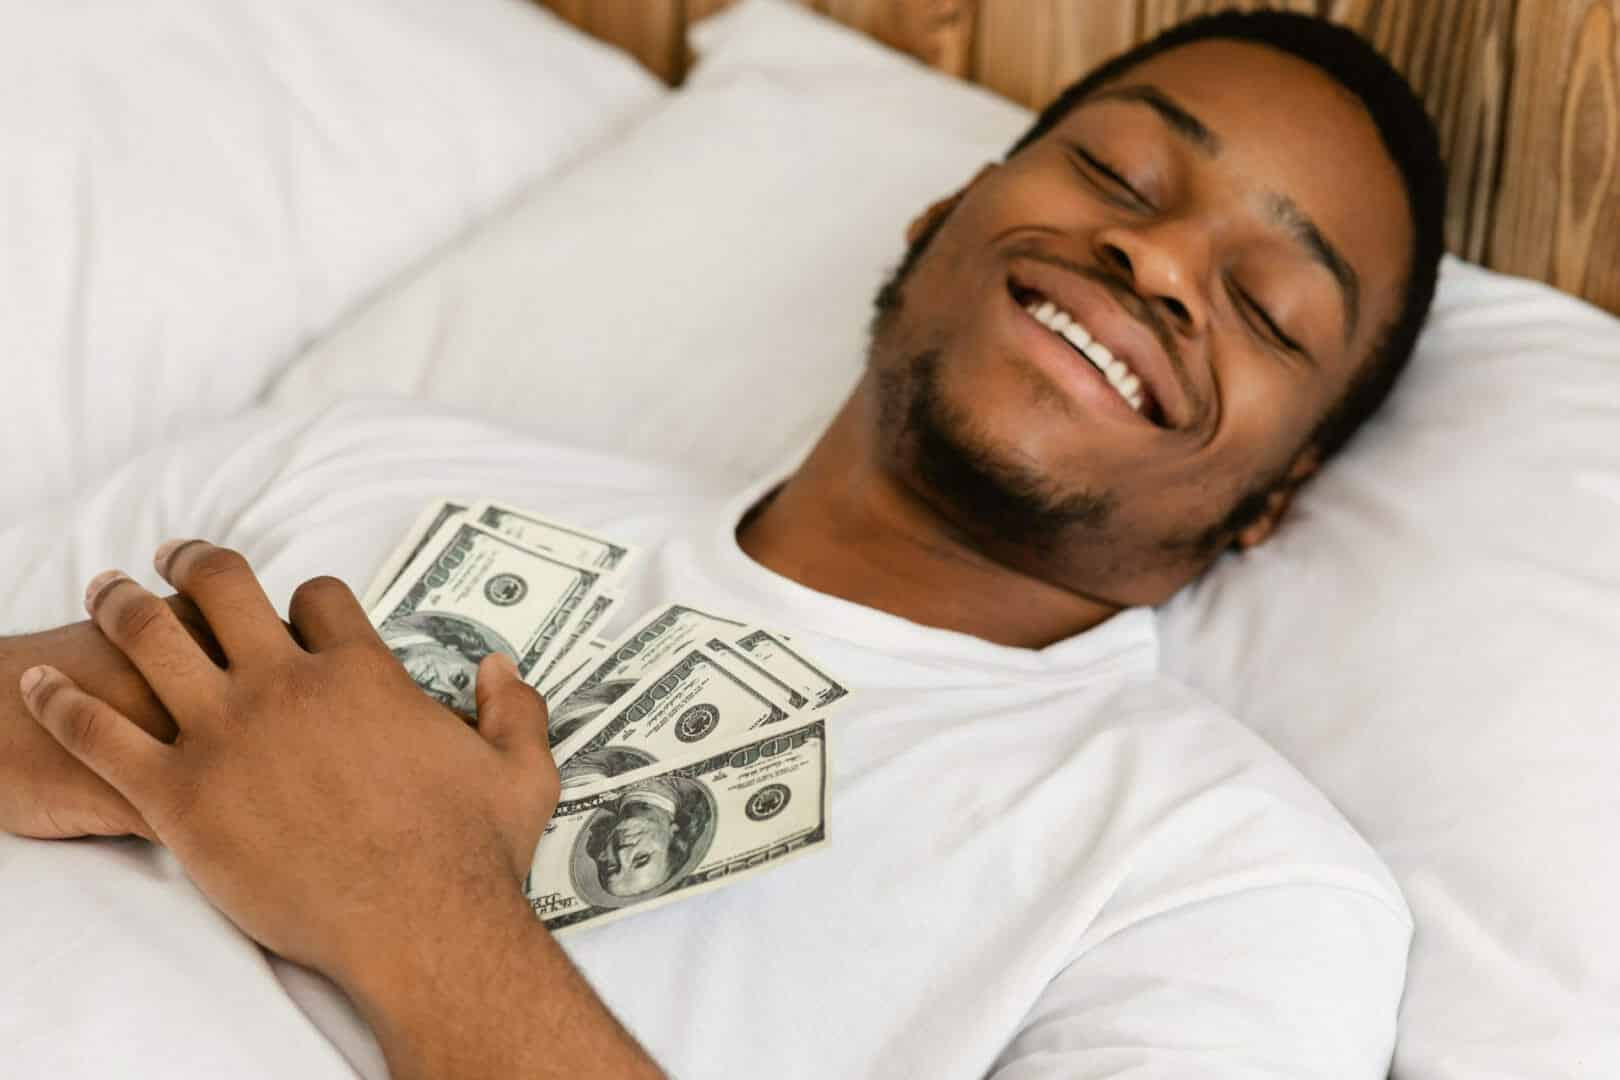 5 Ways to Make Money While You Sleep